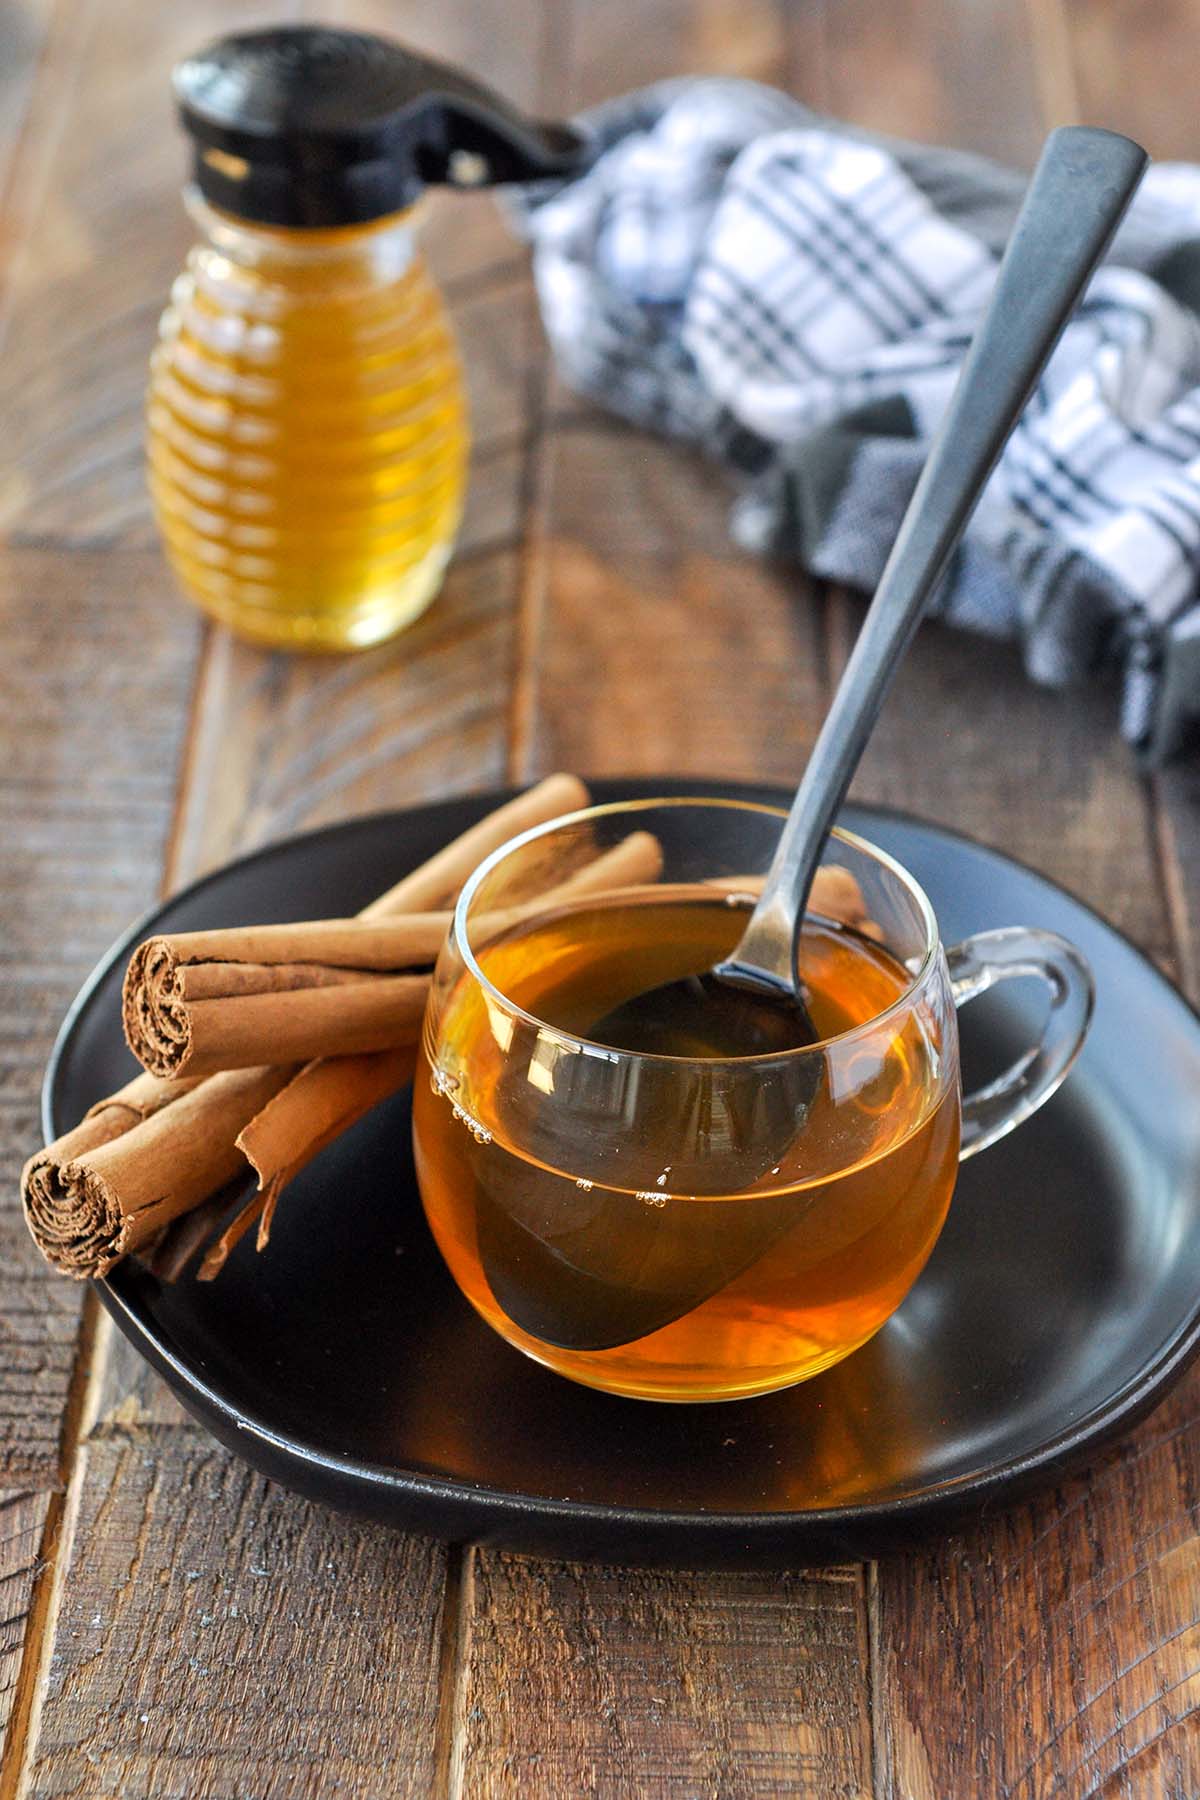 A clear glass mug of cinnamon tea on a black plate with some cinnamon sticks and a honey pot.